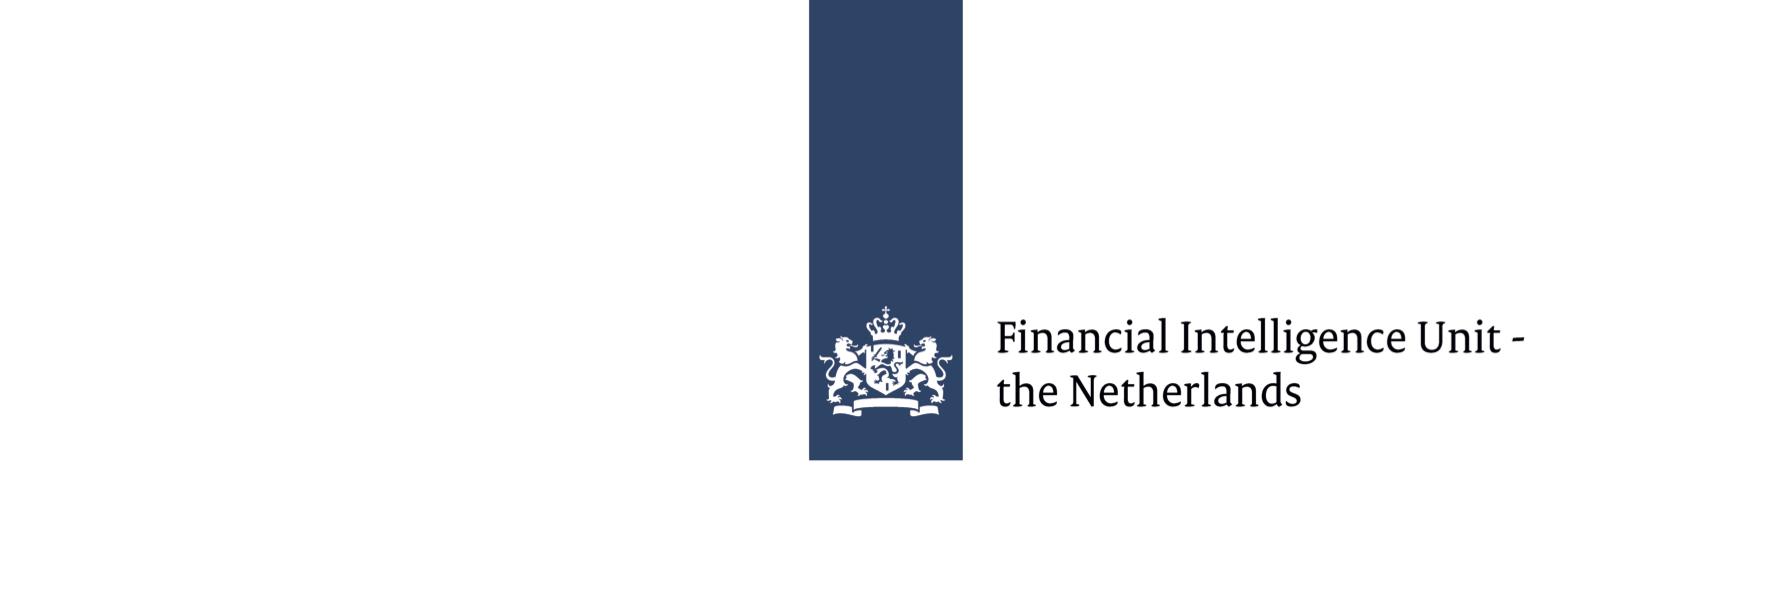 Financial Intelligence Unit - the Netherlands logo